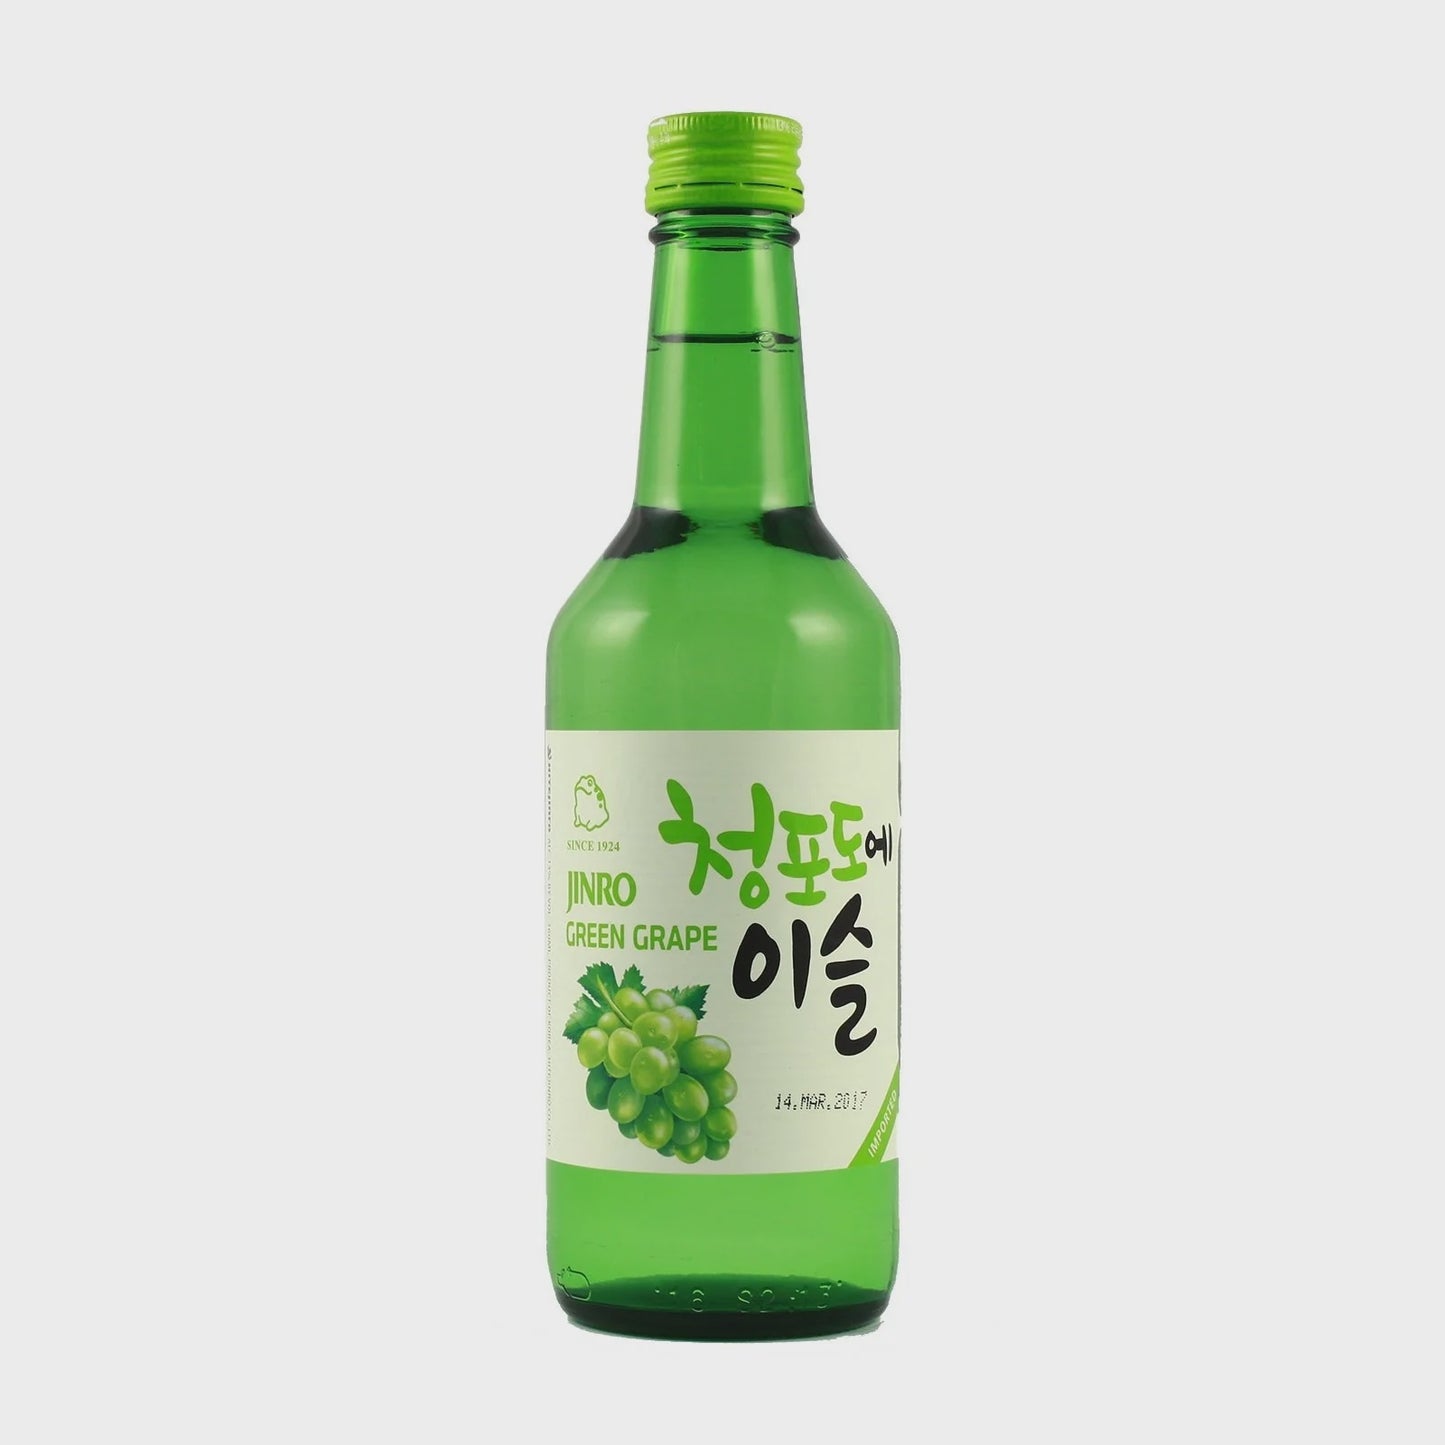 Jinro Chamisul Soju - Green Grape Flavour韓國燒酒 (青葡萄味)Soju Han Quoc Huong nho xanh- 13% Alc./Vol 350ml x1